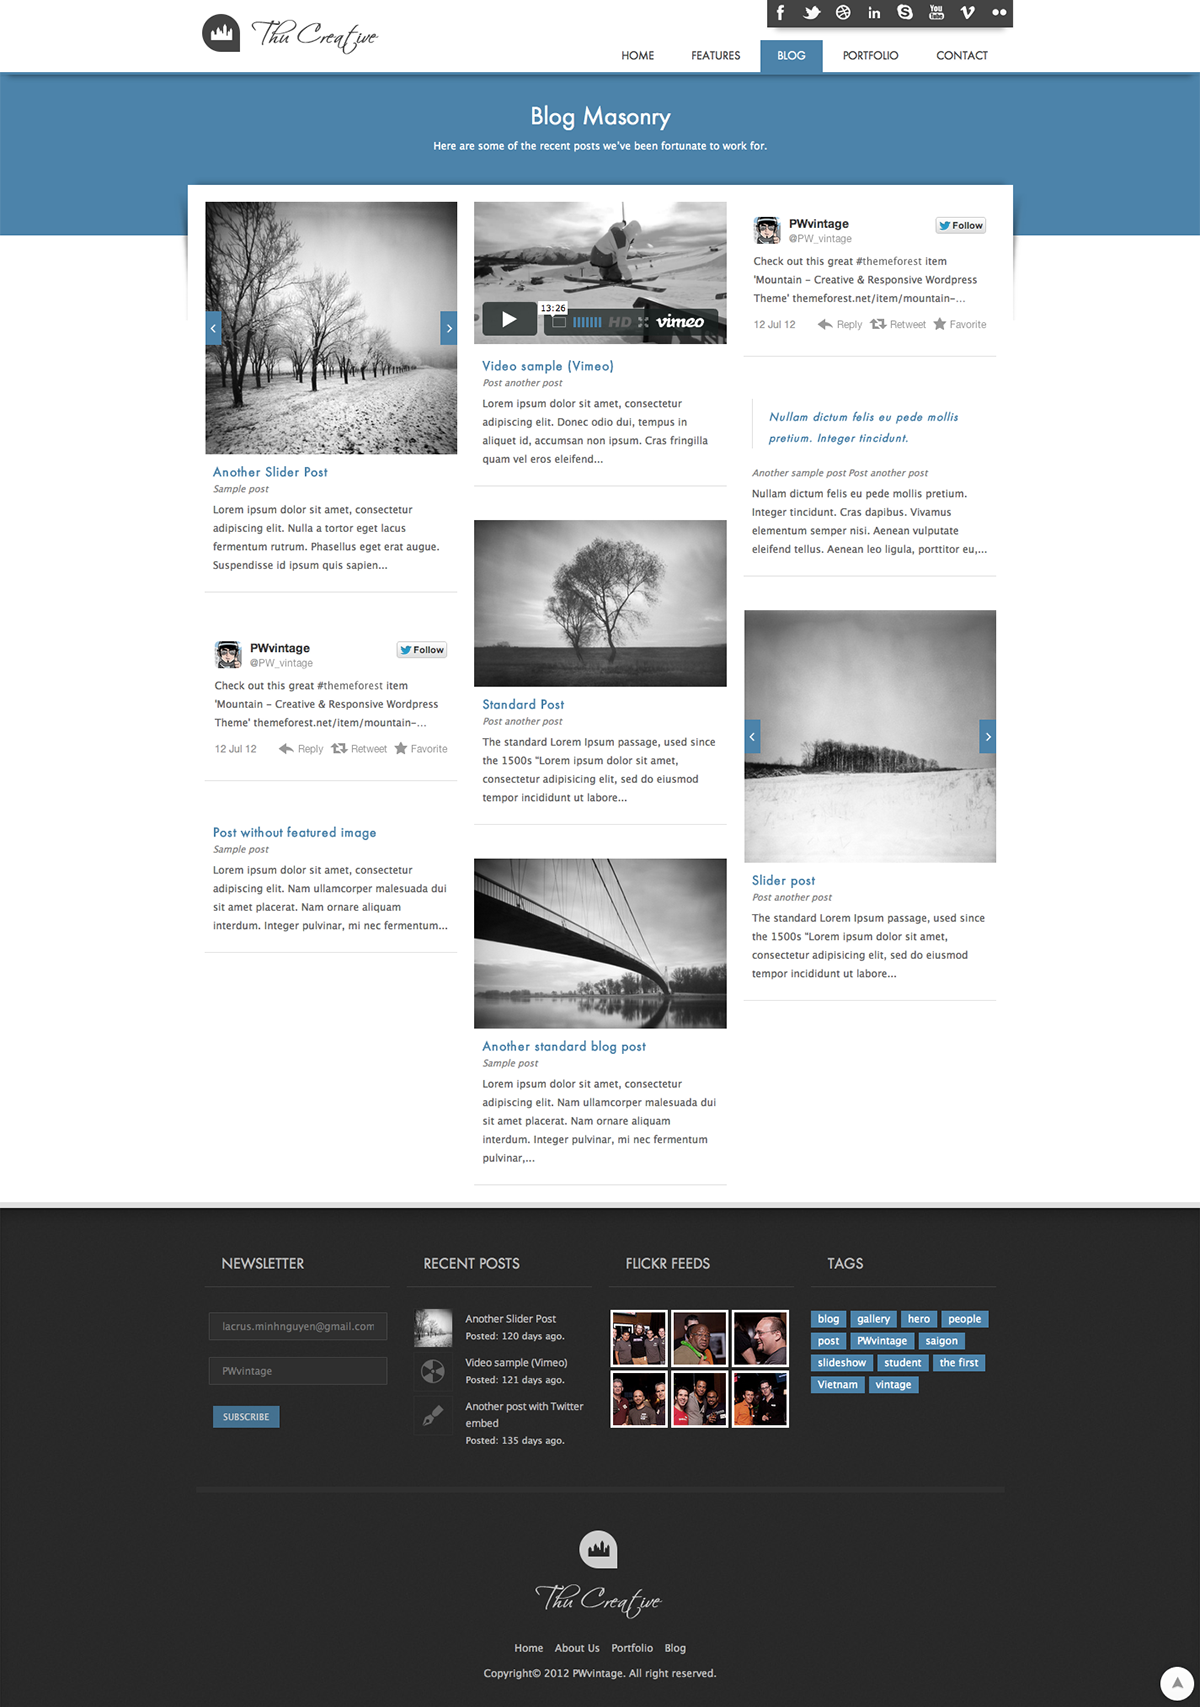 thu  wordpress  Theme  design  responsive  clean  modern  web  website  corporate  business